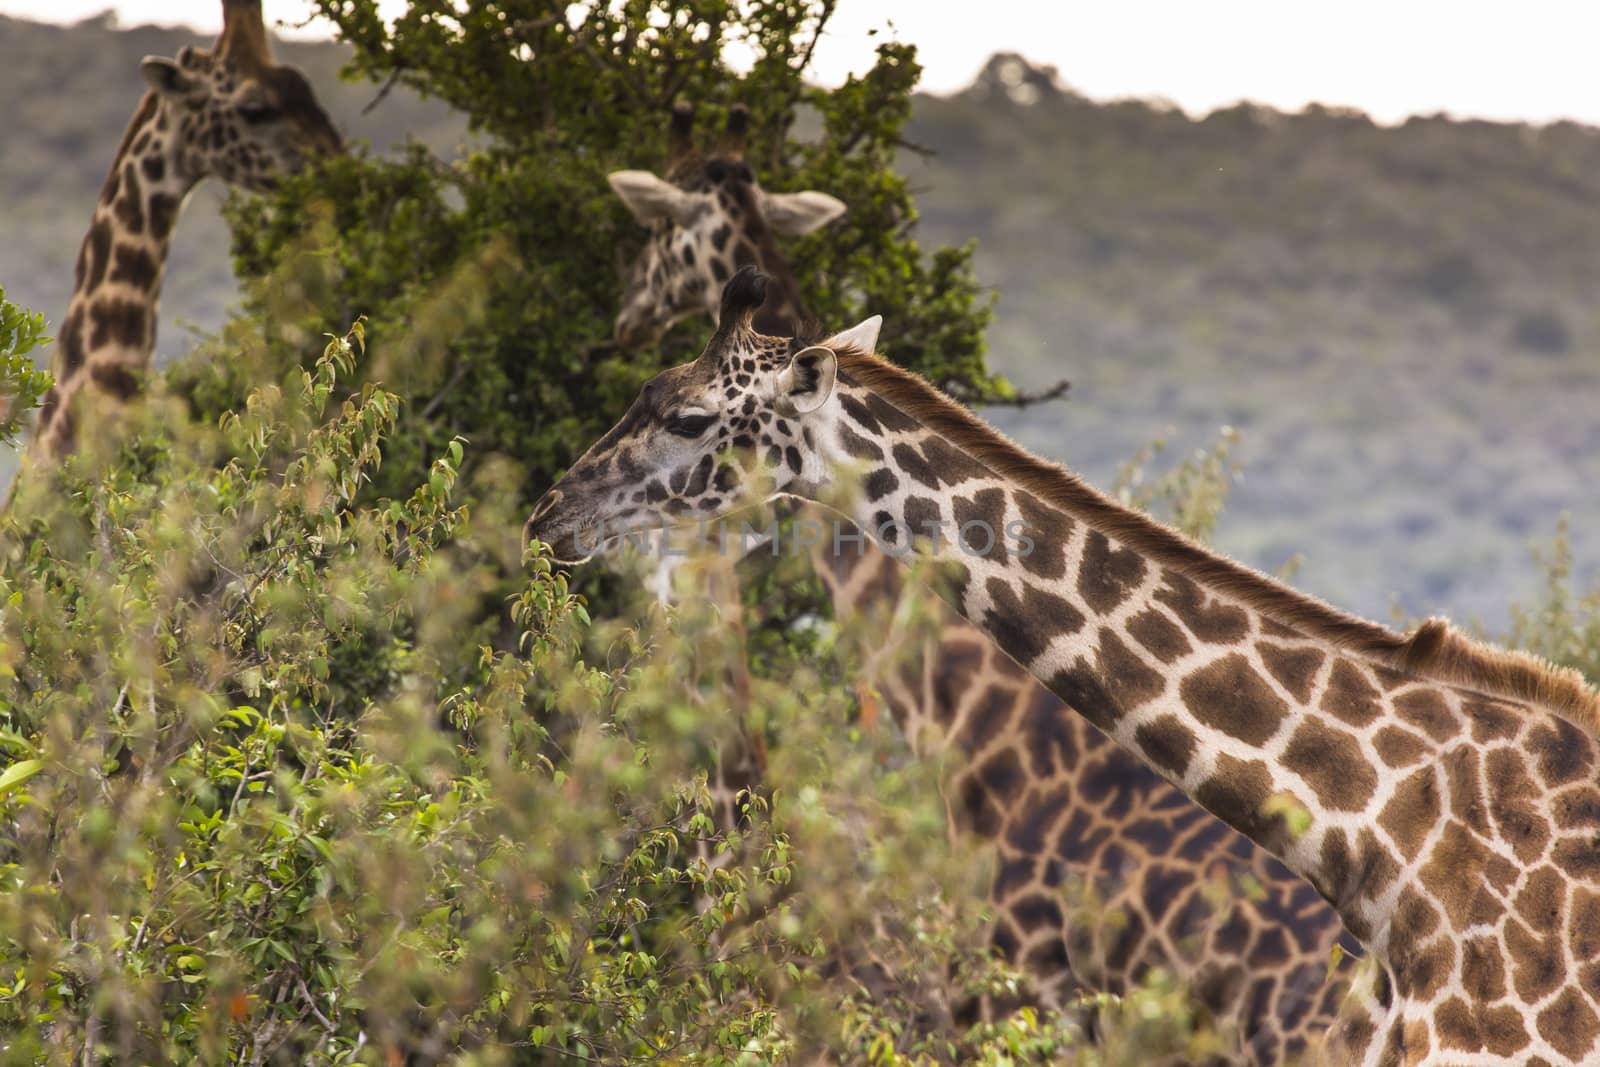 Giraffe on safari wild drive, Kenia. by mariusz_prusaczyk